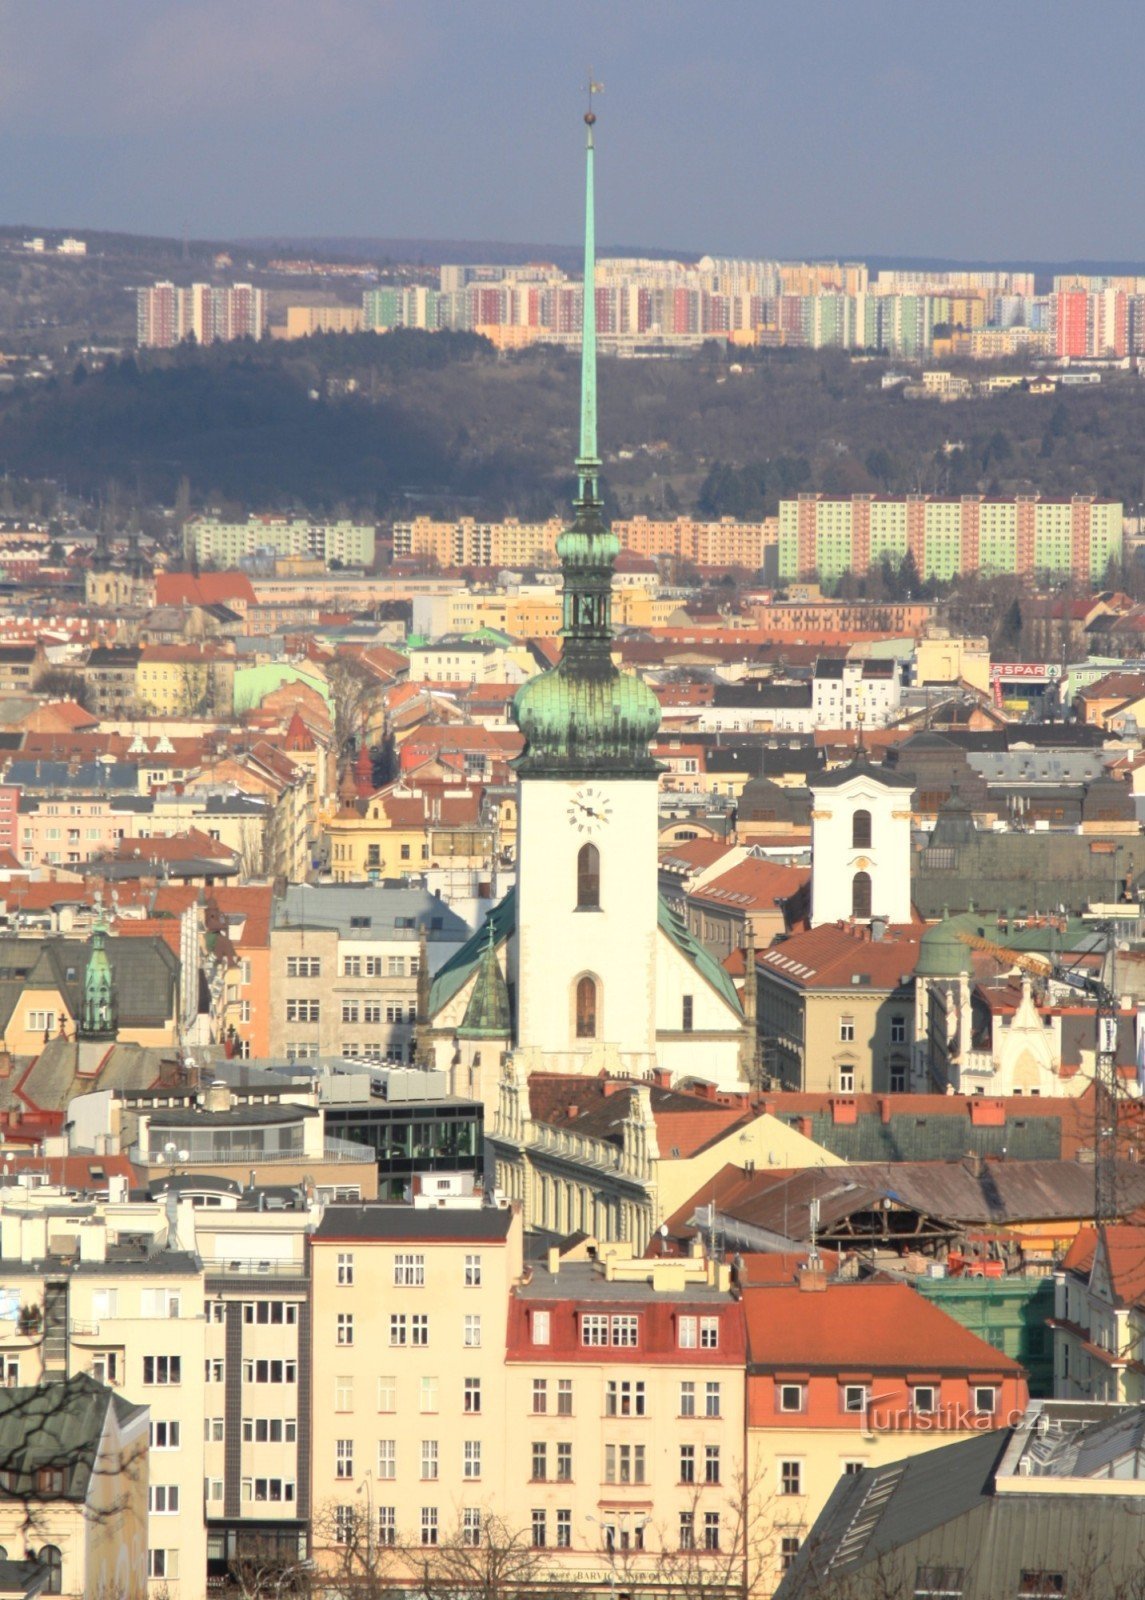 Brno - St. Jacob's Tower